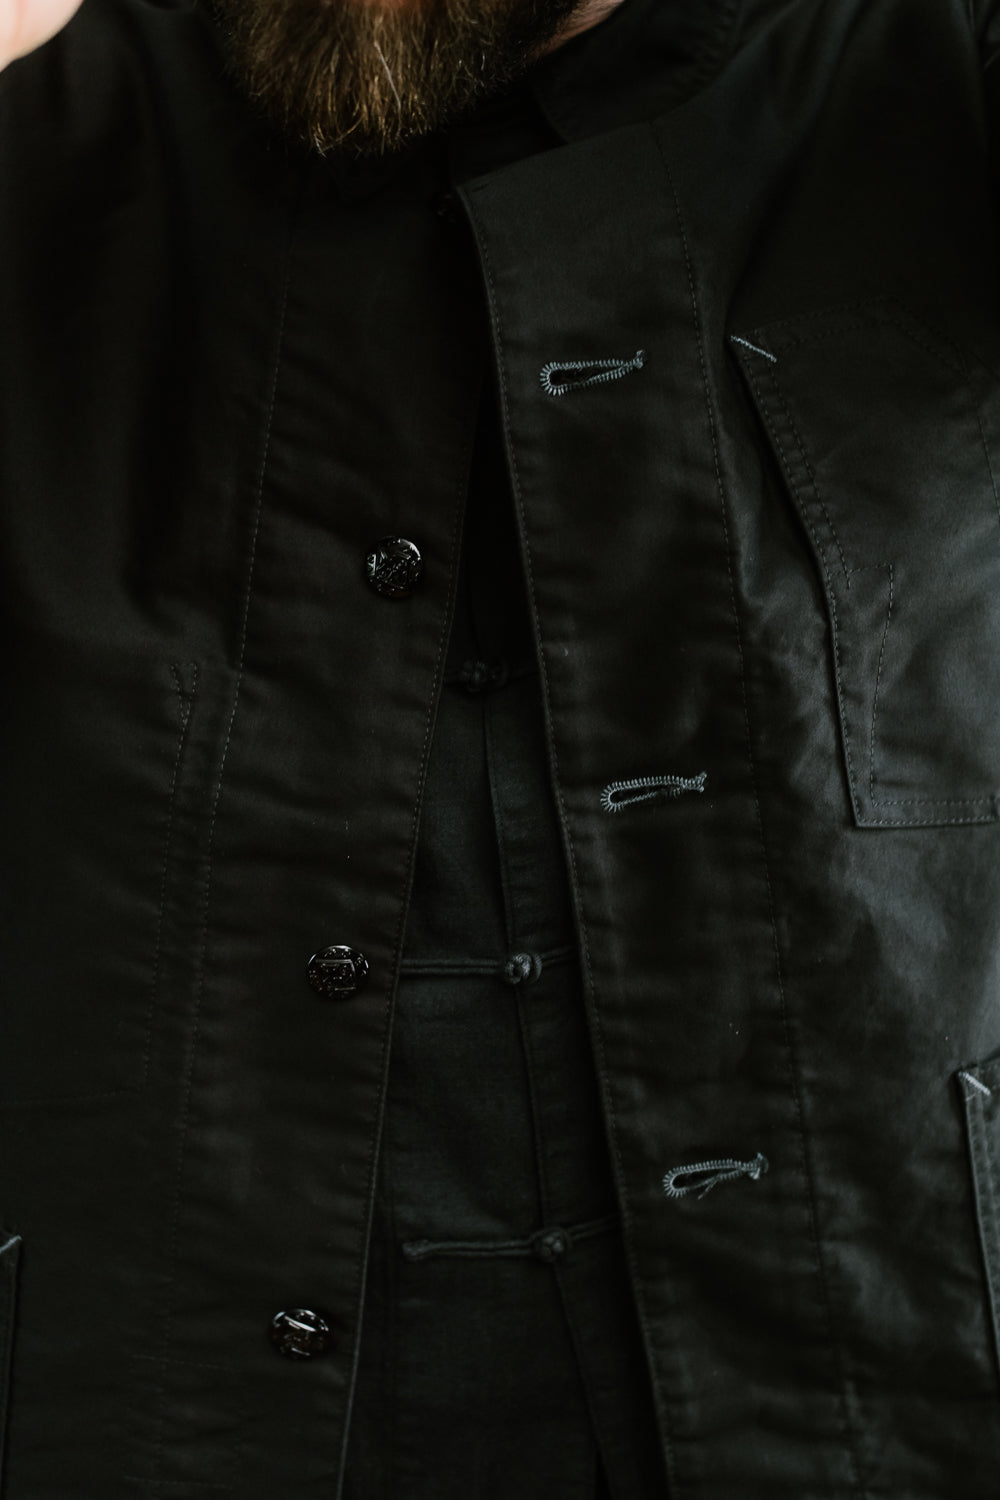 1101-MB - No. 1 Jacket Vintage Moleskin - Black